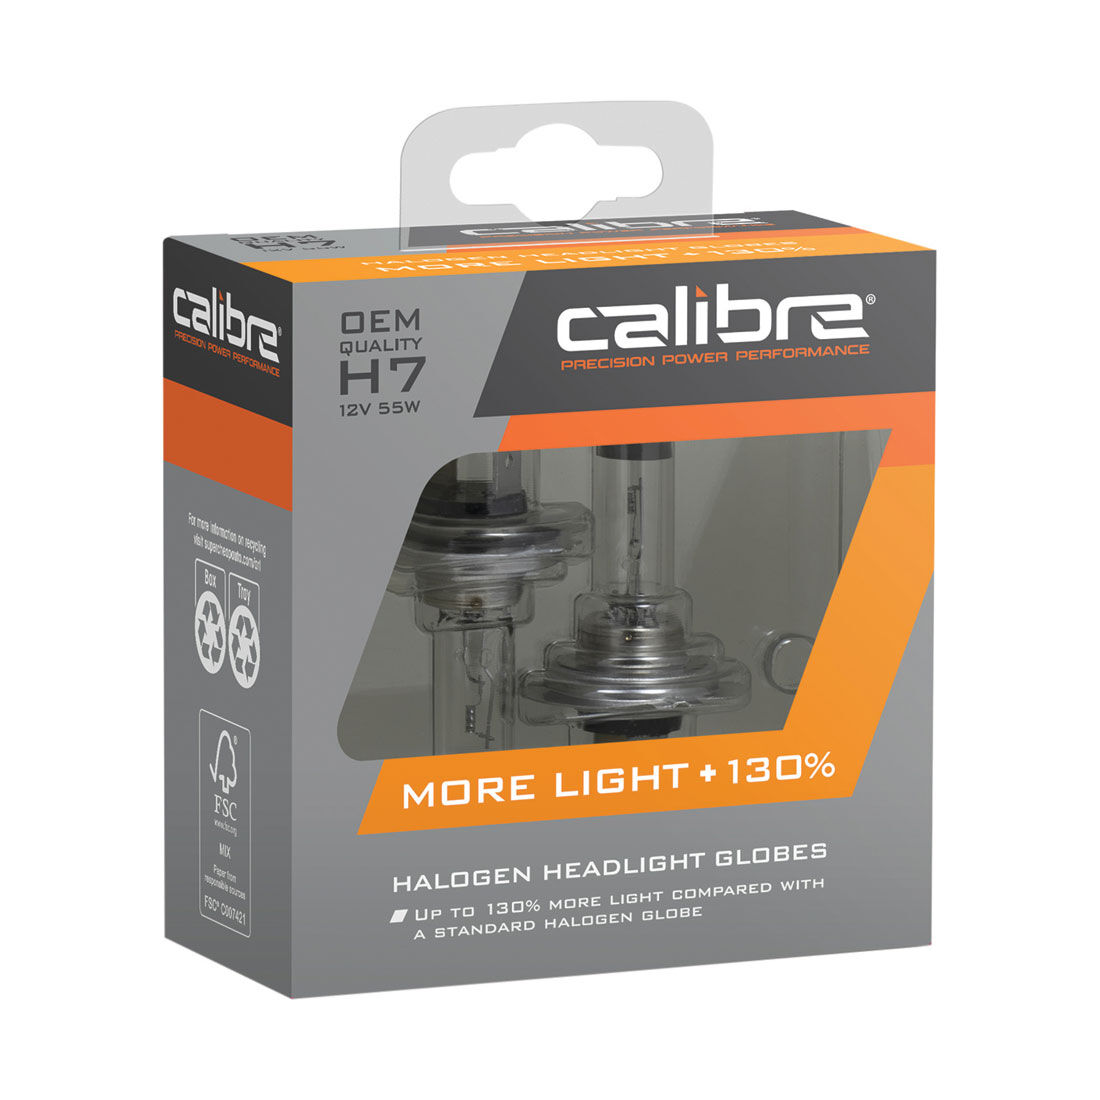 Calibre Plus 130 Headlight Globes - H7, 12V 55W, CA130H7, , scaau_hi-res